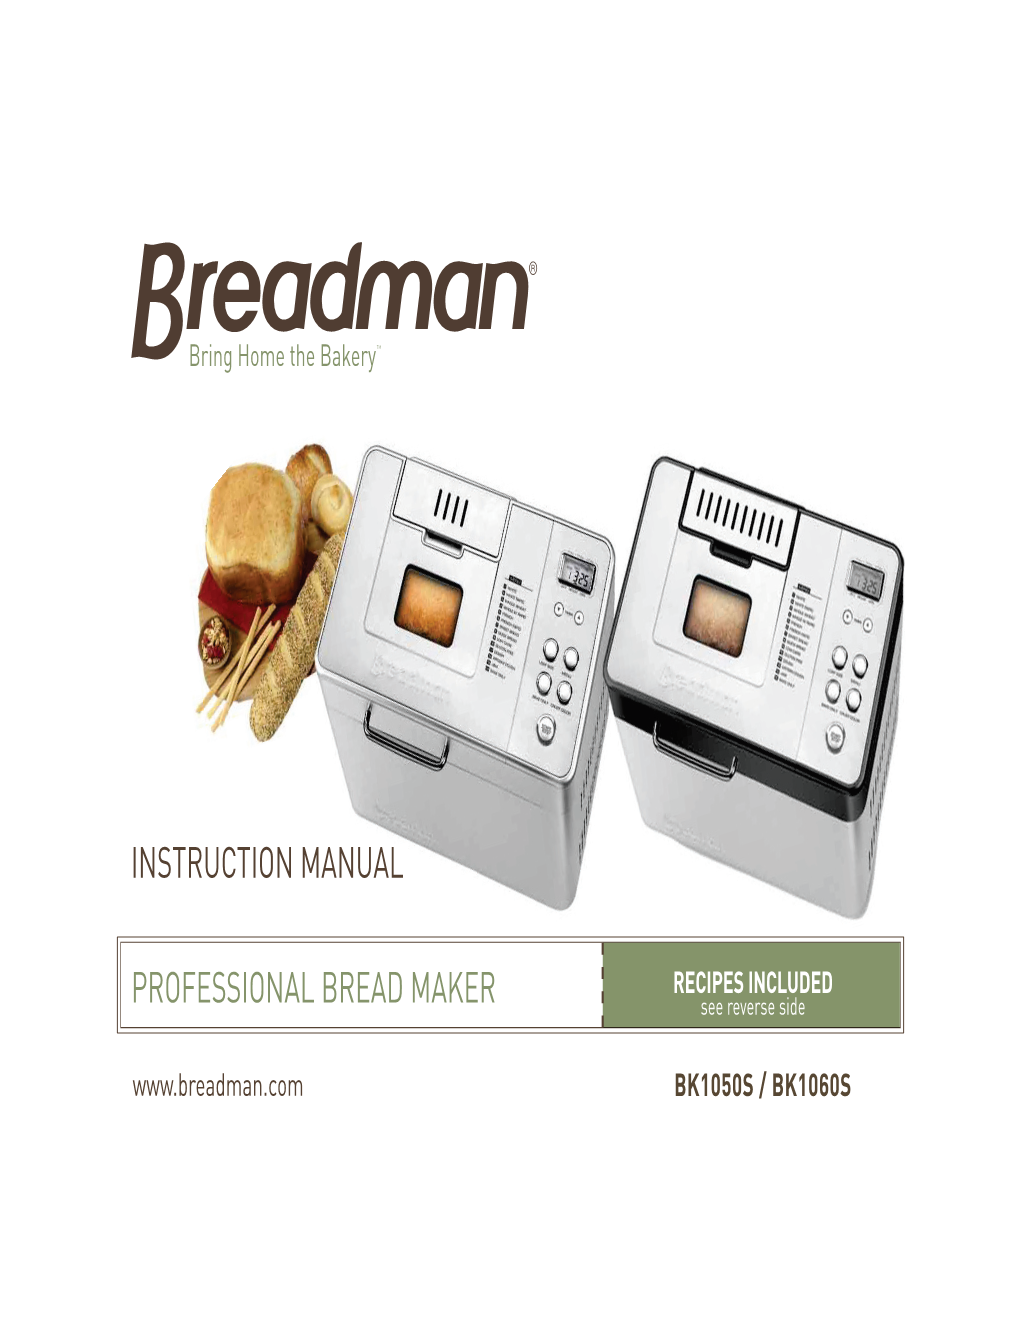 Professional Bread Maker Instruction Manual